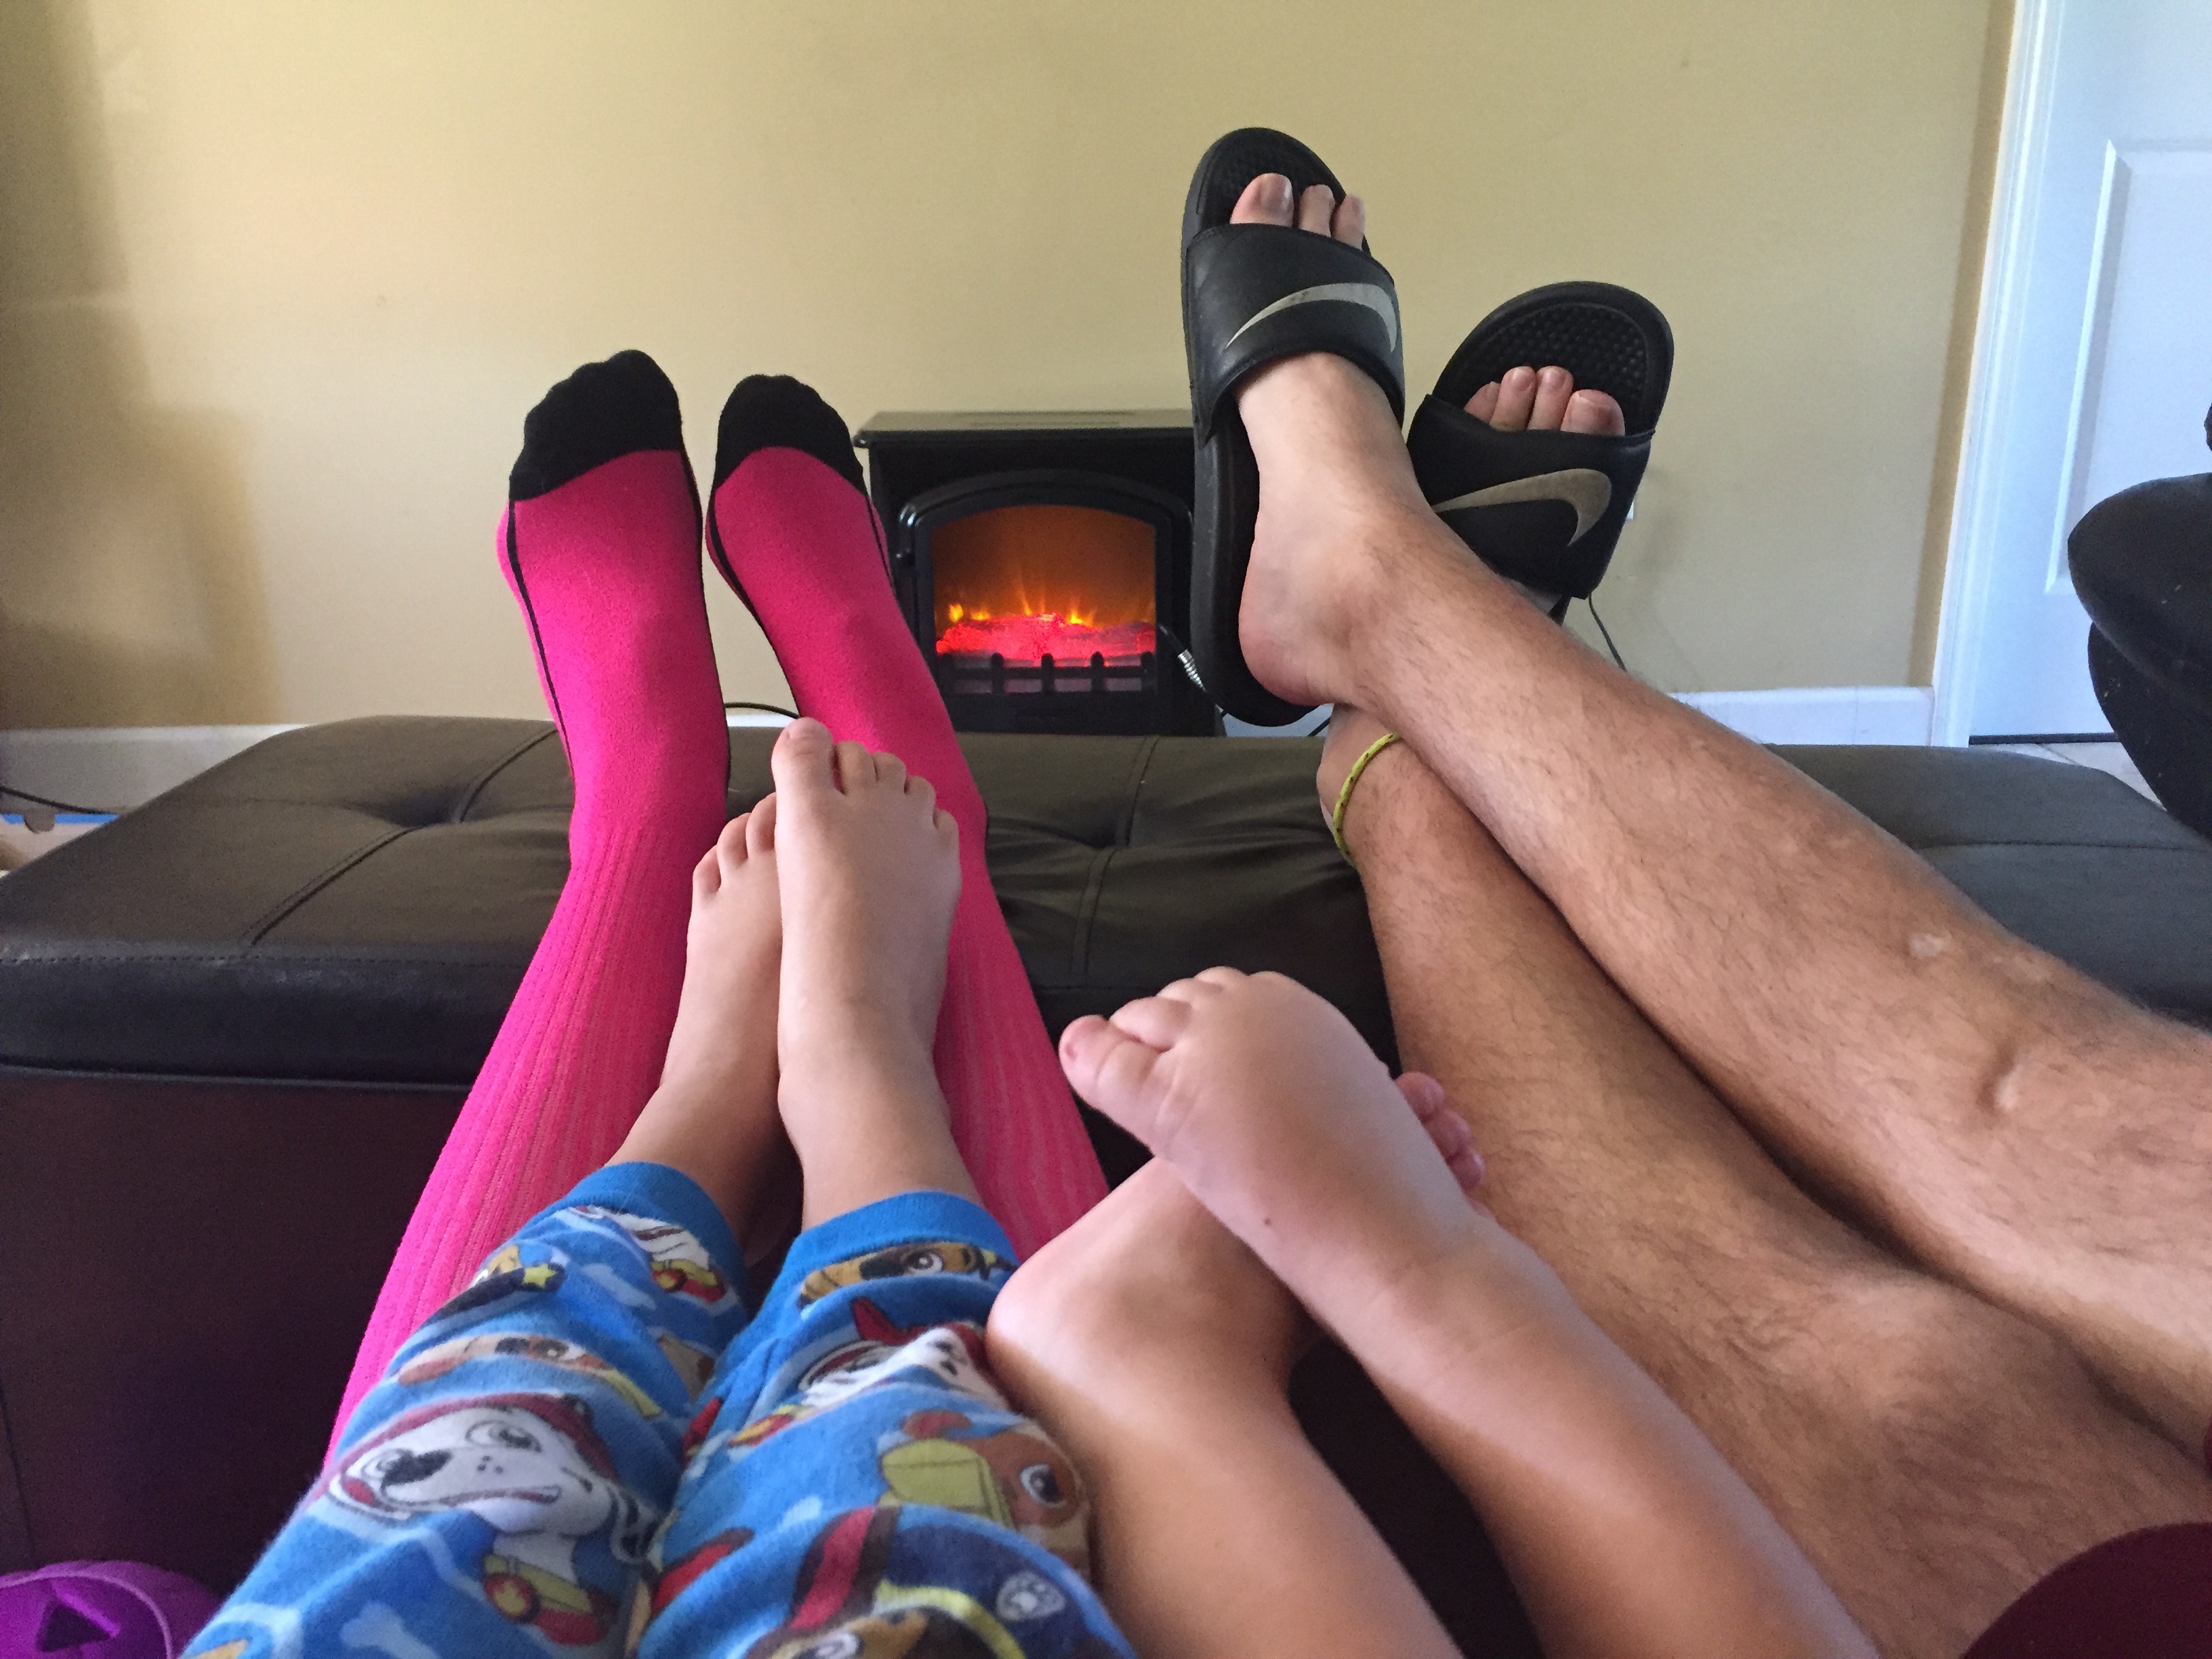 Feet photos are always a fun family photo ideas. #familyphotos #familyphotoideas #feetphotos #familyphotoshoot #kidsphotoideas